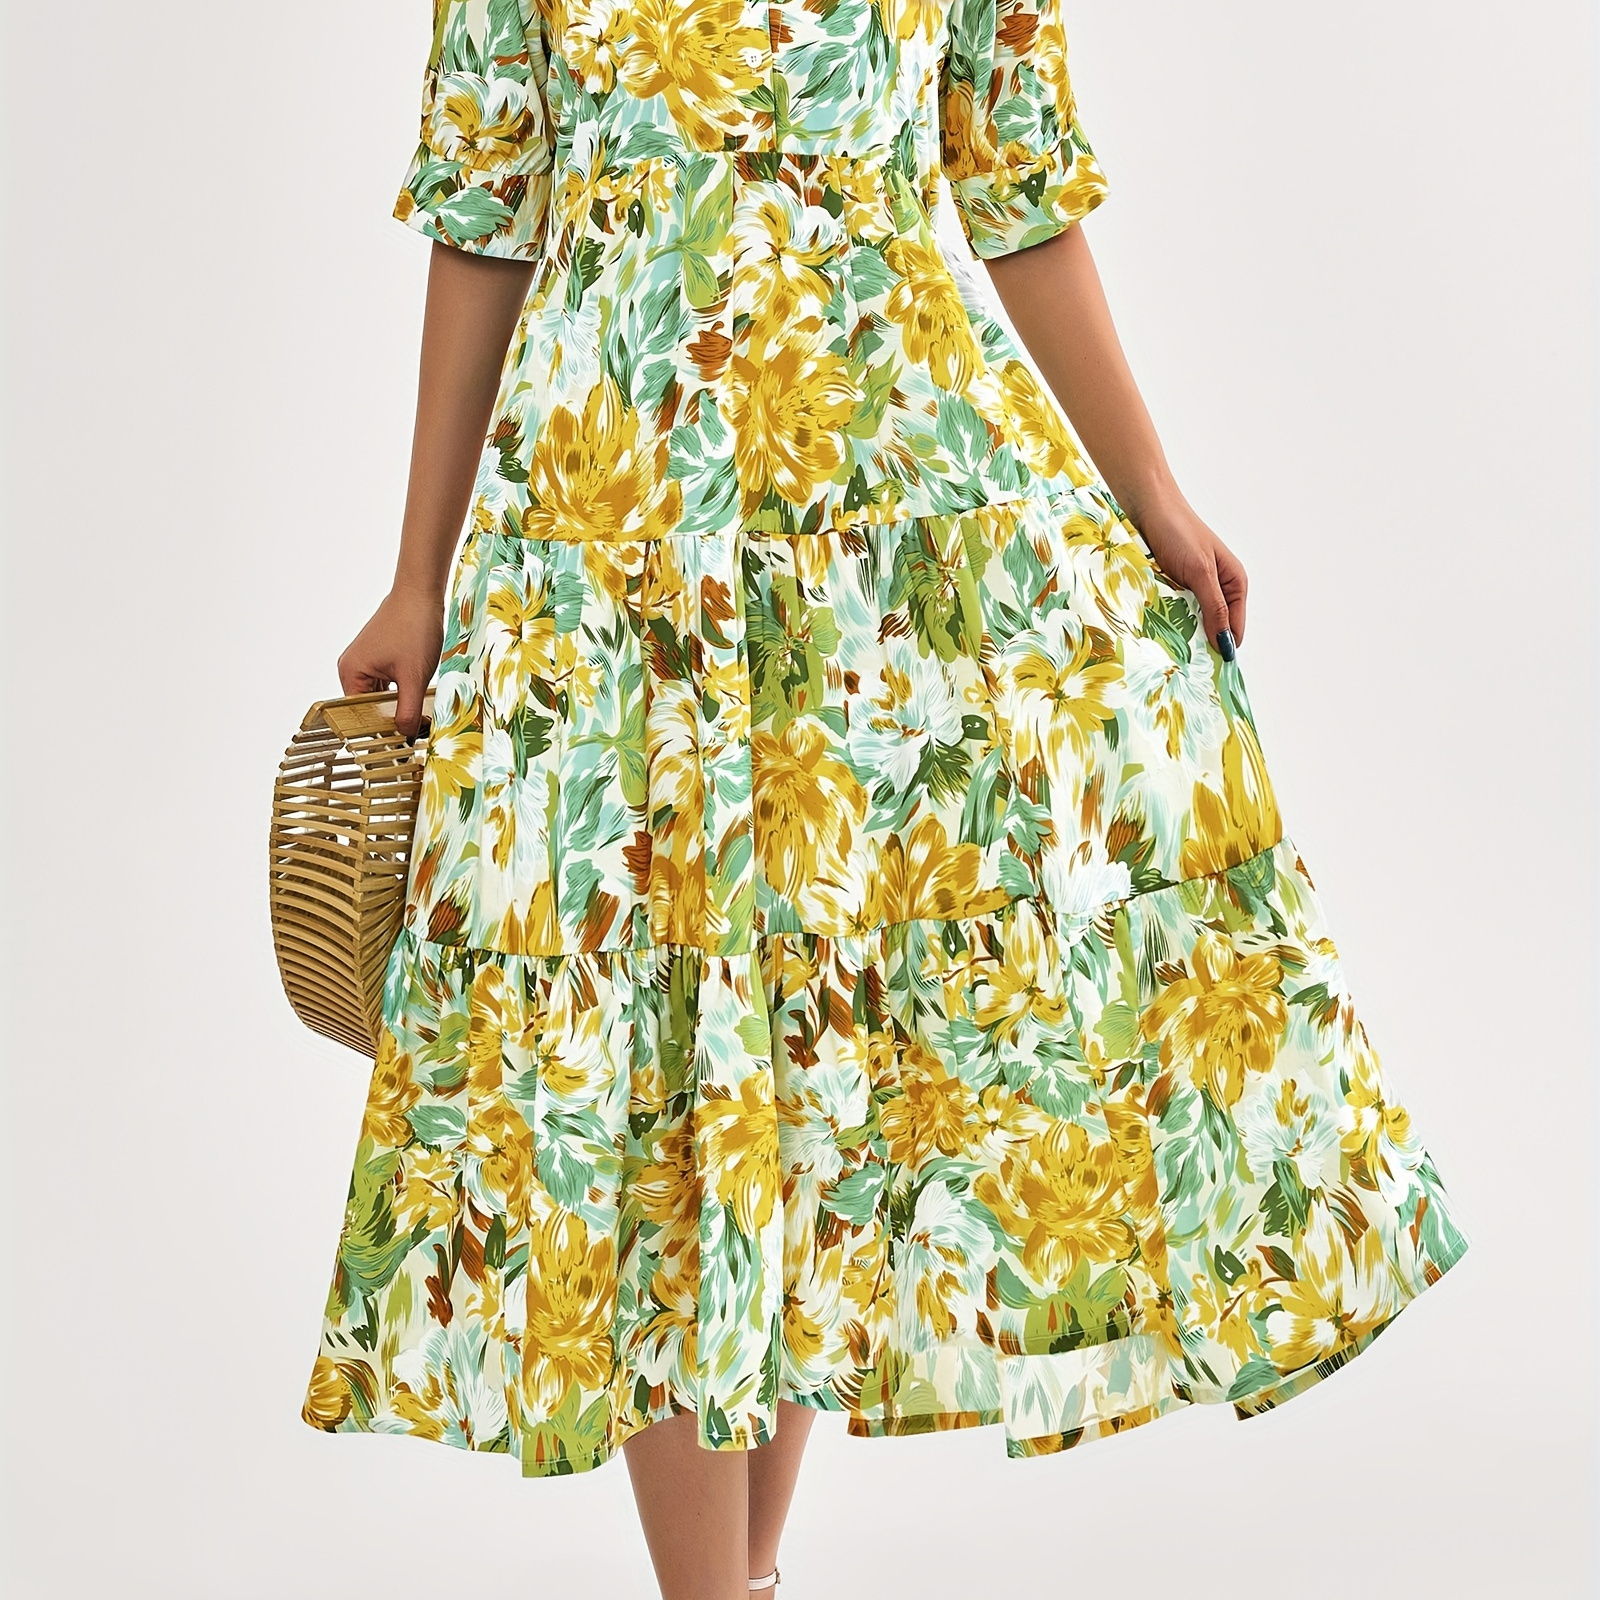 

Floral Print Lapel Neck Dress, Elegant Short Sleeve Button Front Layered Ruffle Hem Dress For Spring & Summer, Women's Clothing